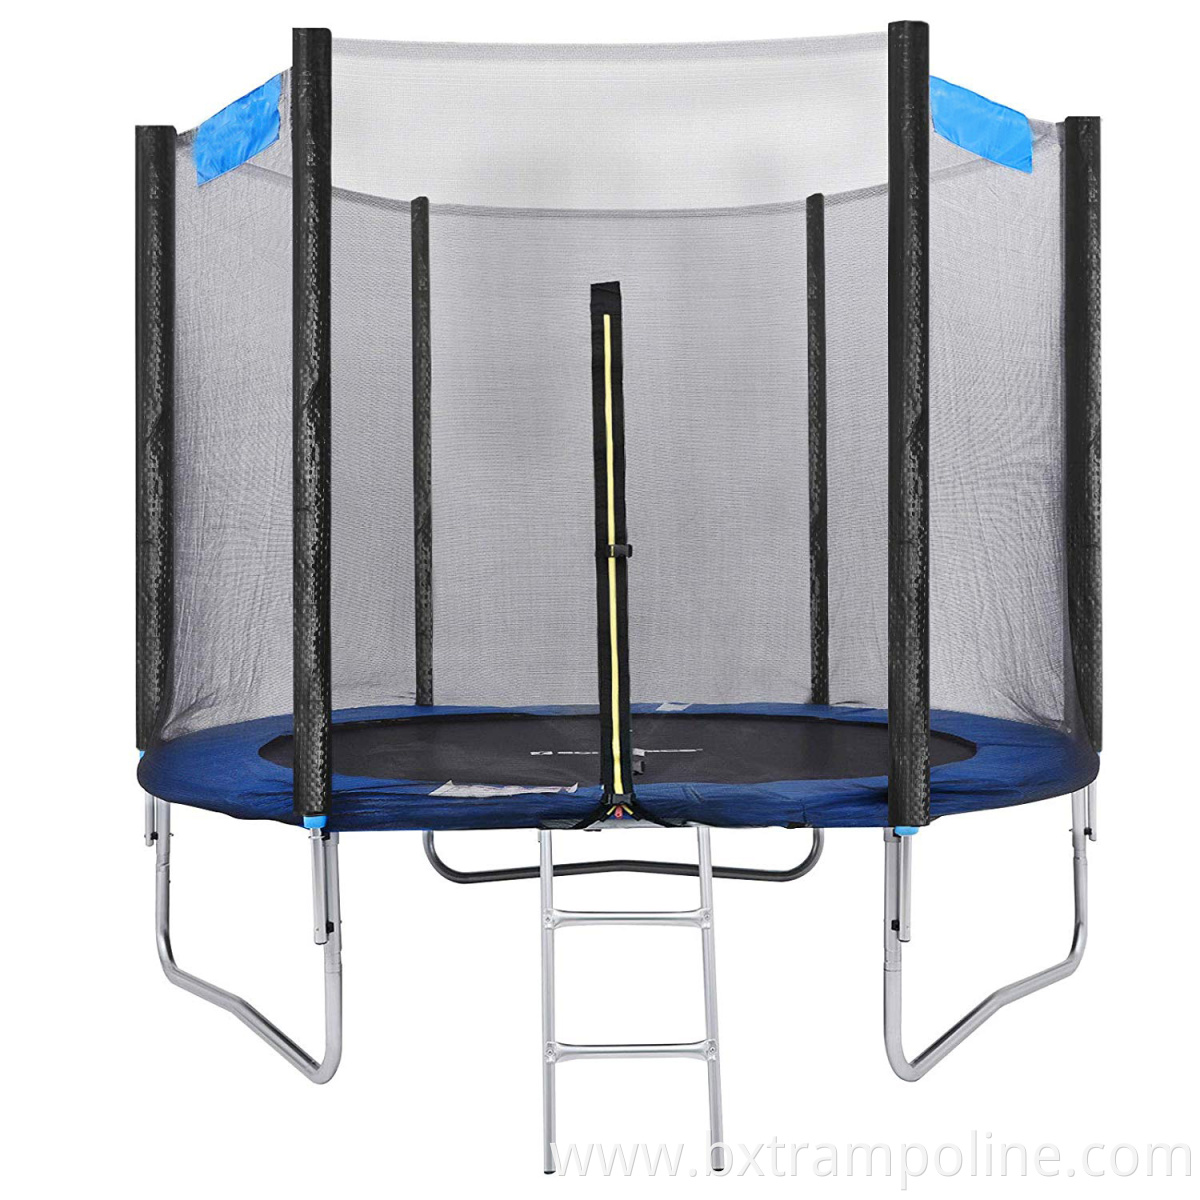 Outdoor Trampoline - Garden Trampoline Complete Set with Sturdy U-Legs, Internal Net, Jumping Mat and Ladder